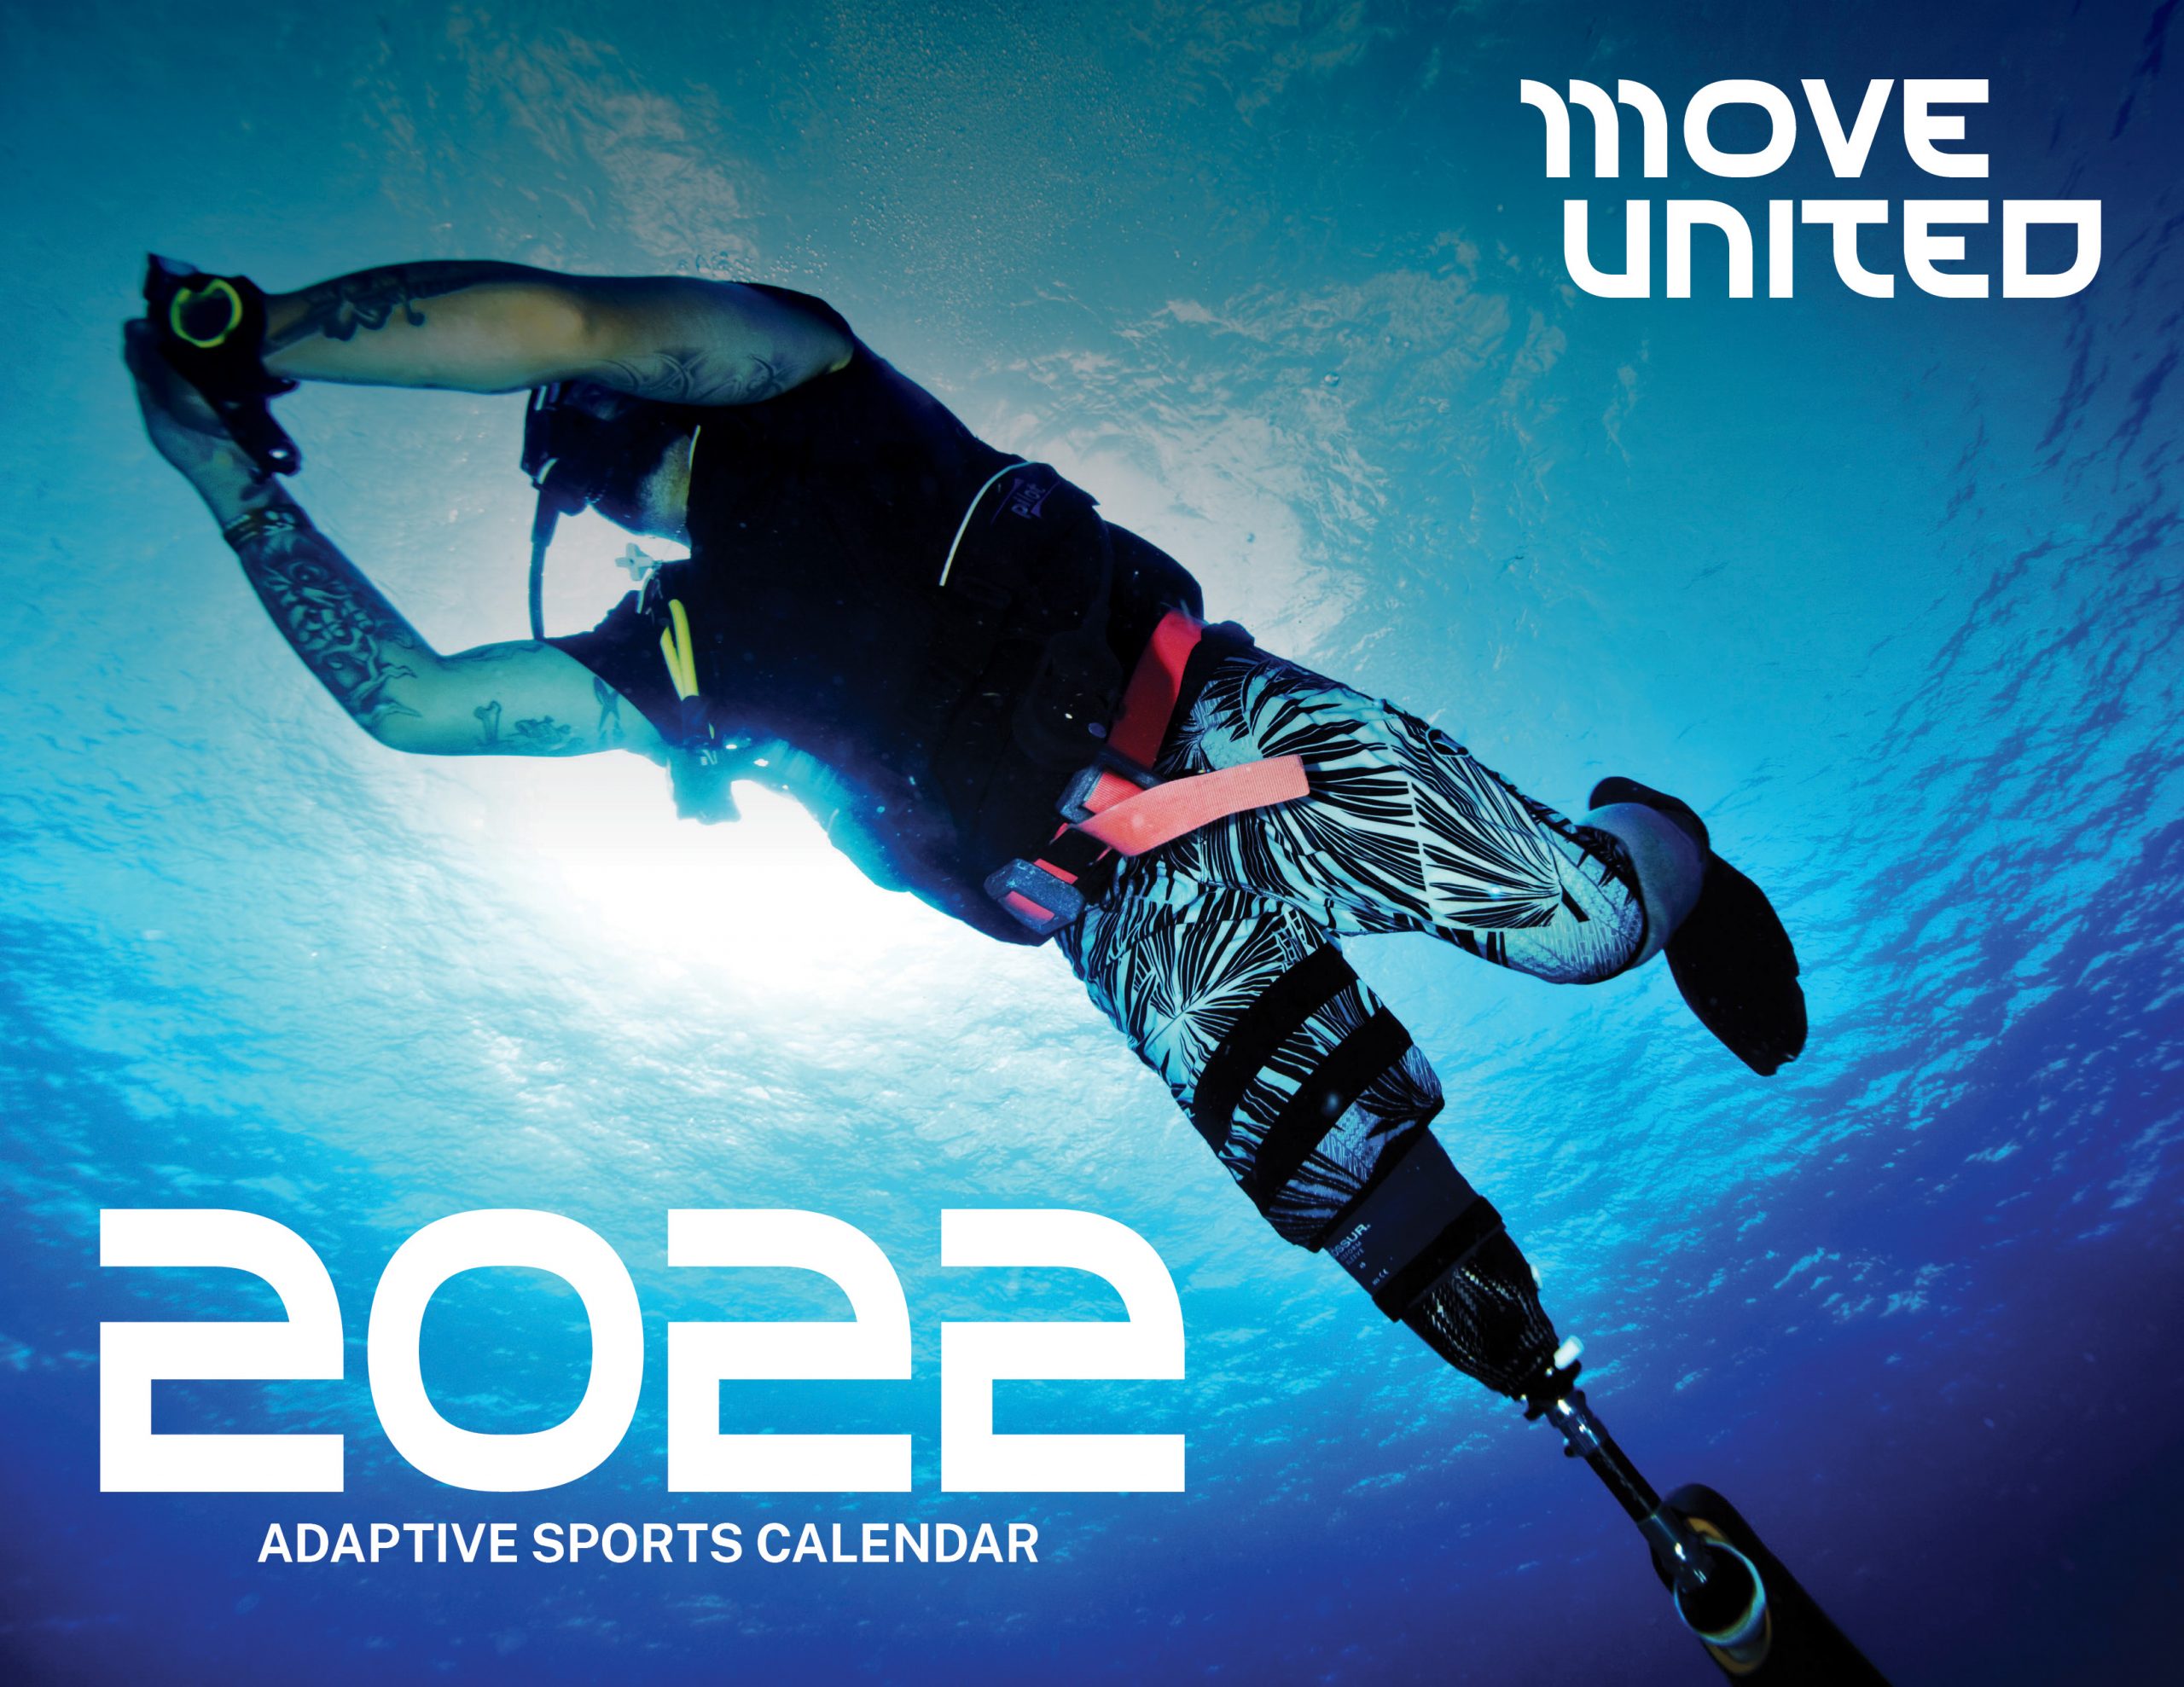 Adaptive Sports Calendar Showcases the Power of Sport - Move United